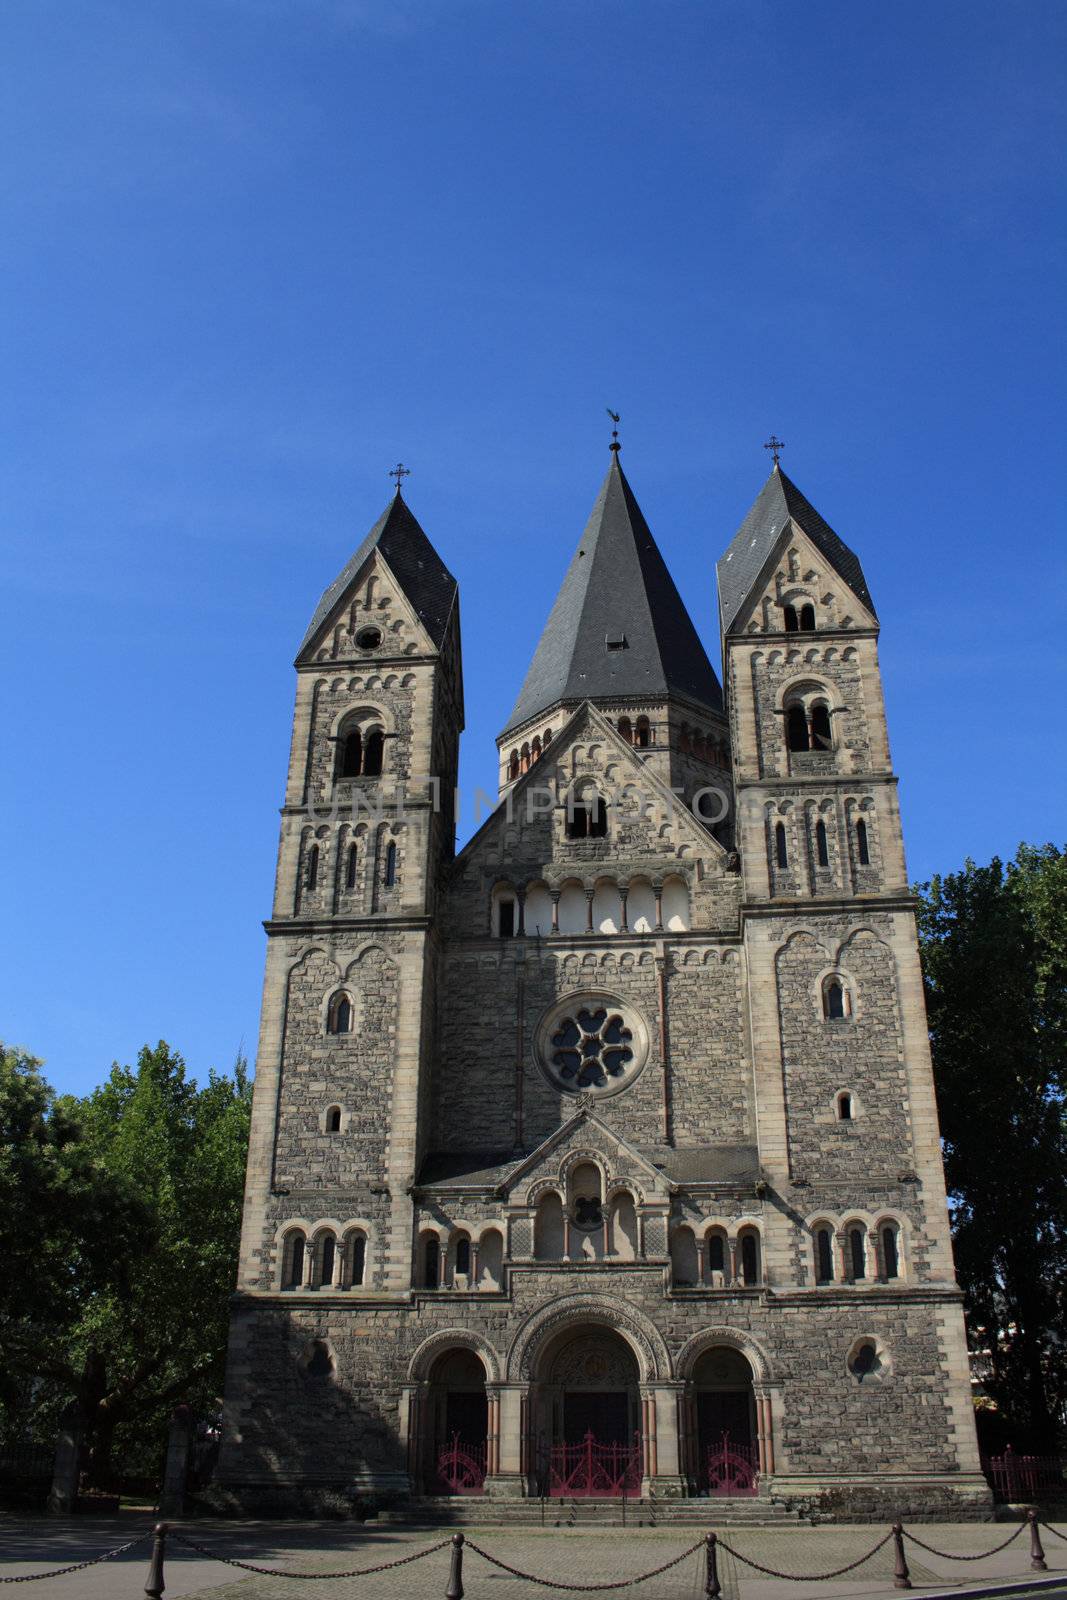 A beautiful church in Germany.